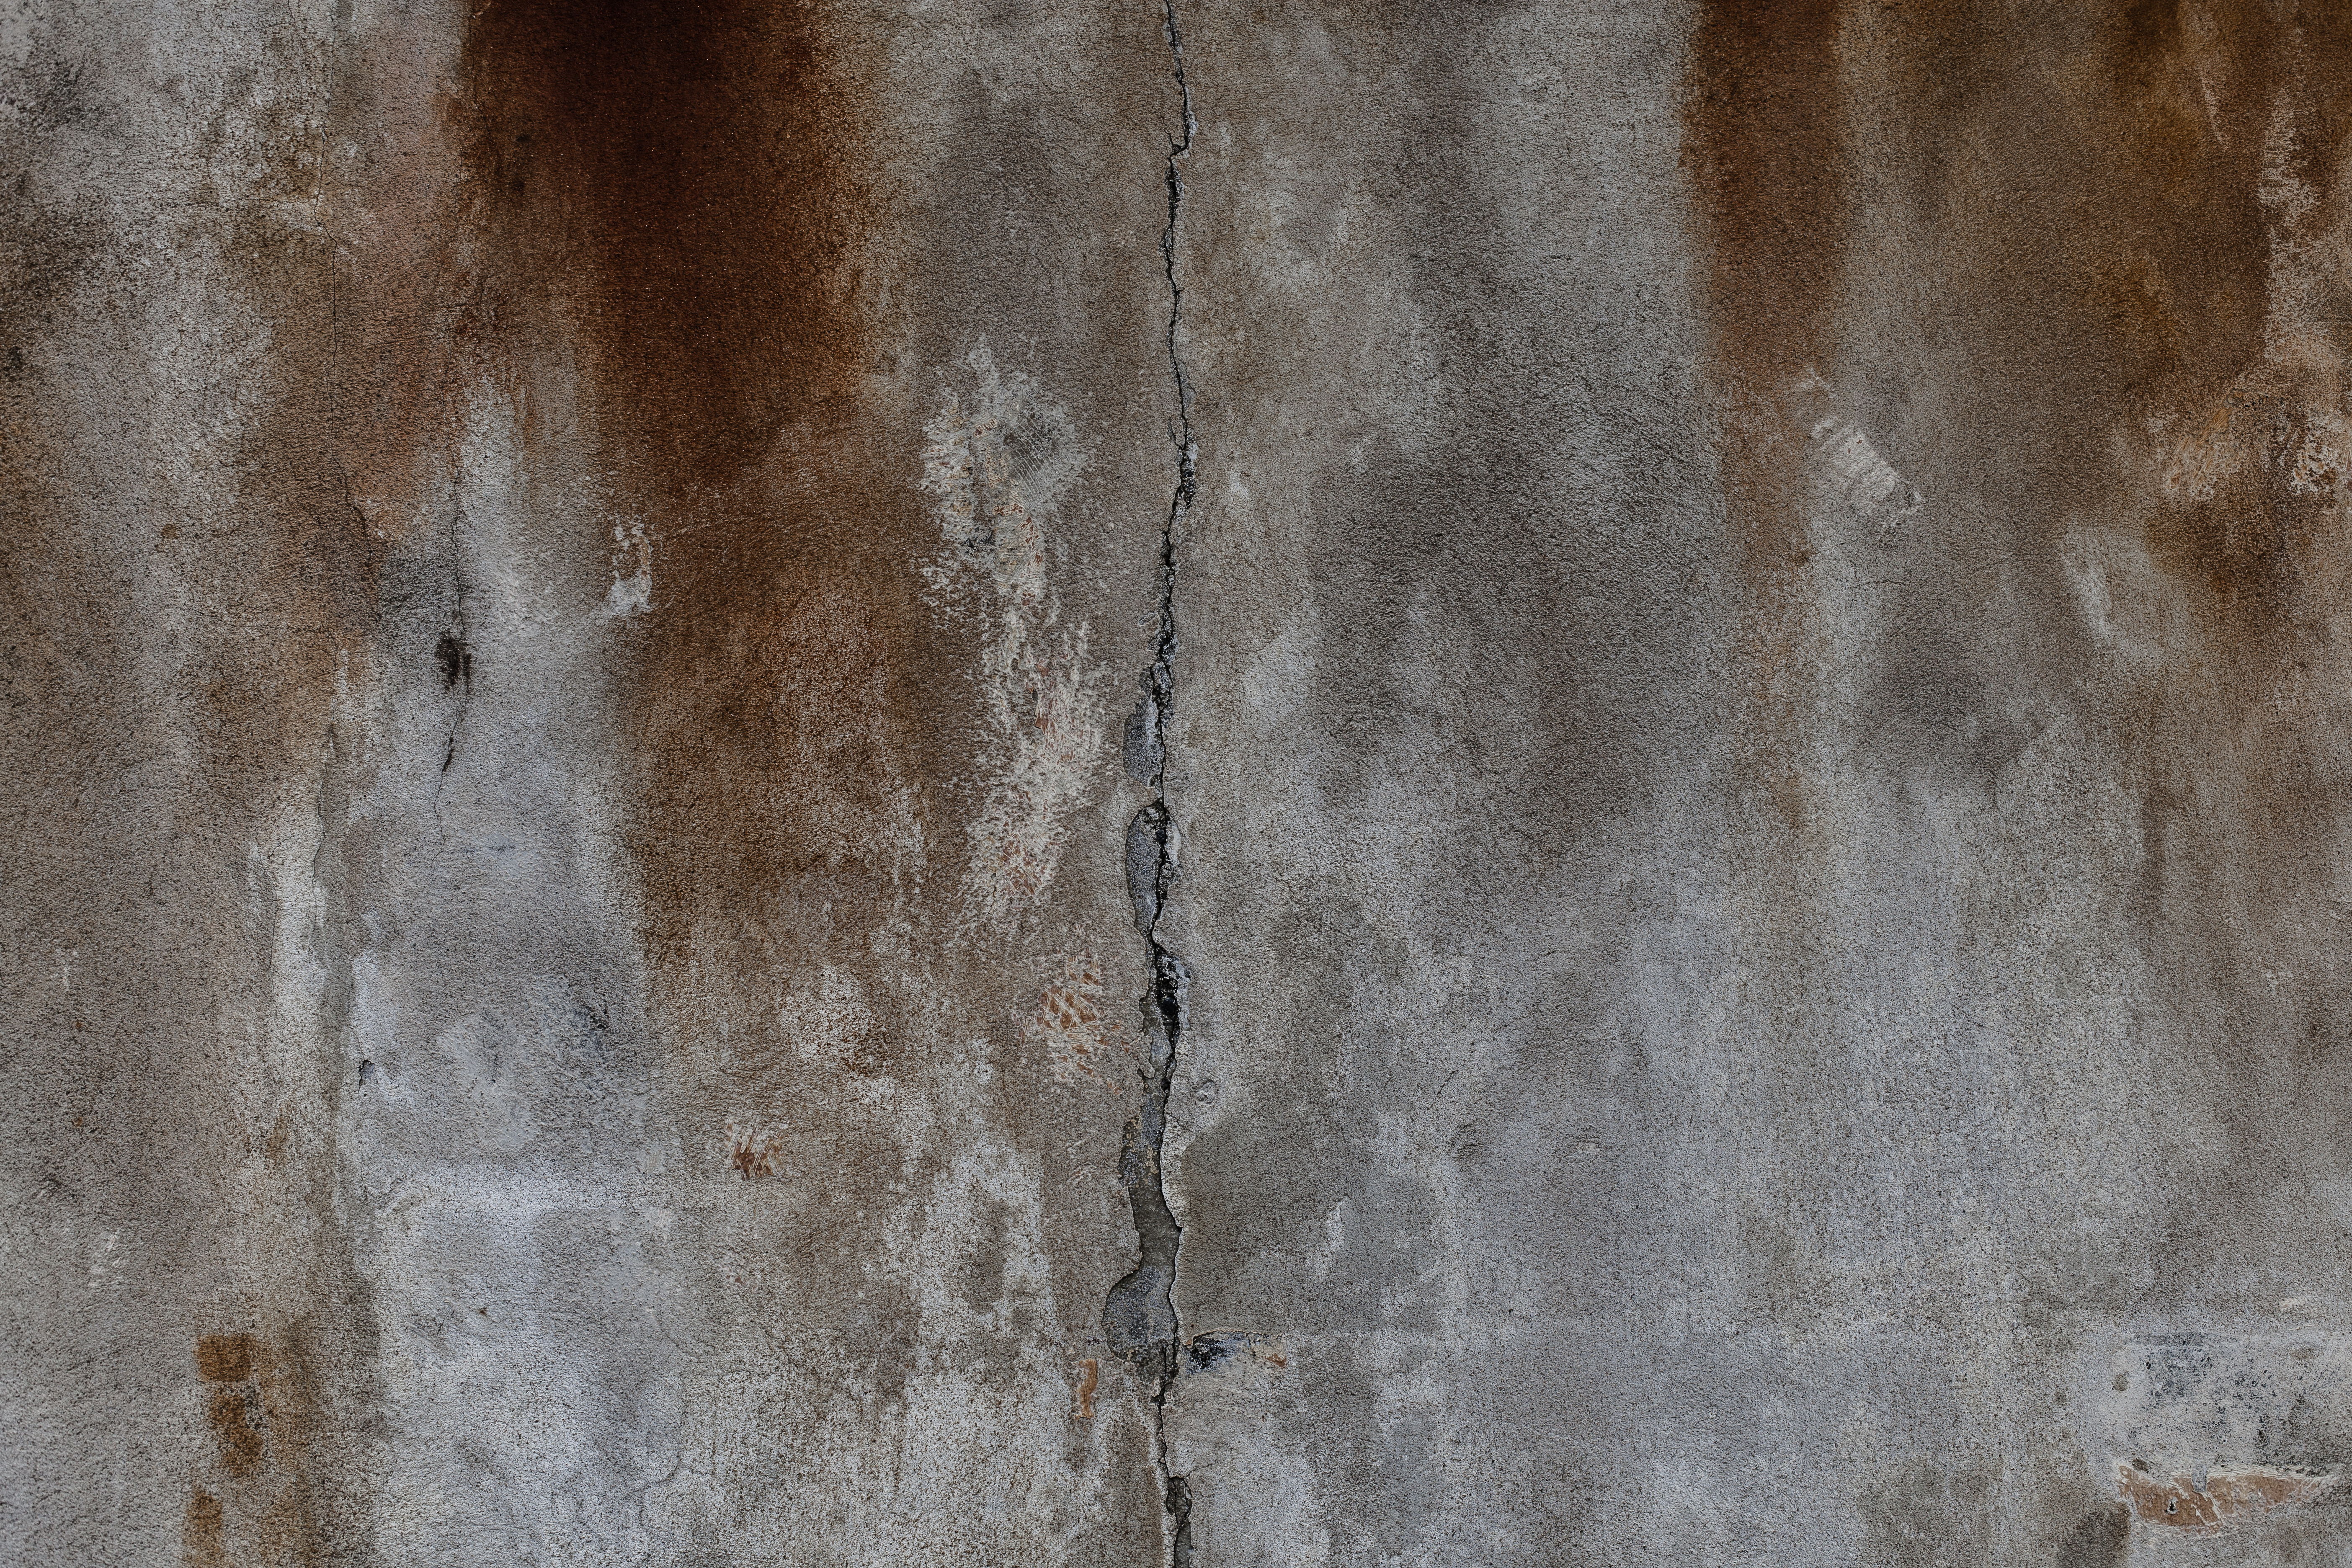 Grunge cracked concrete surface photo